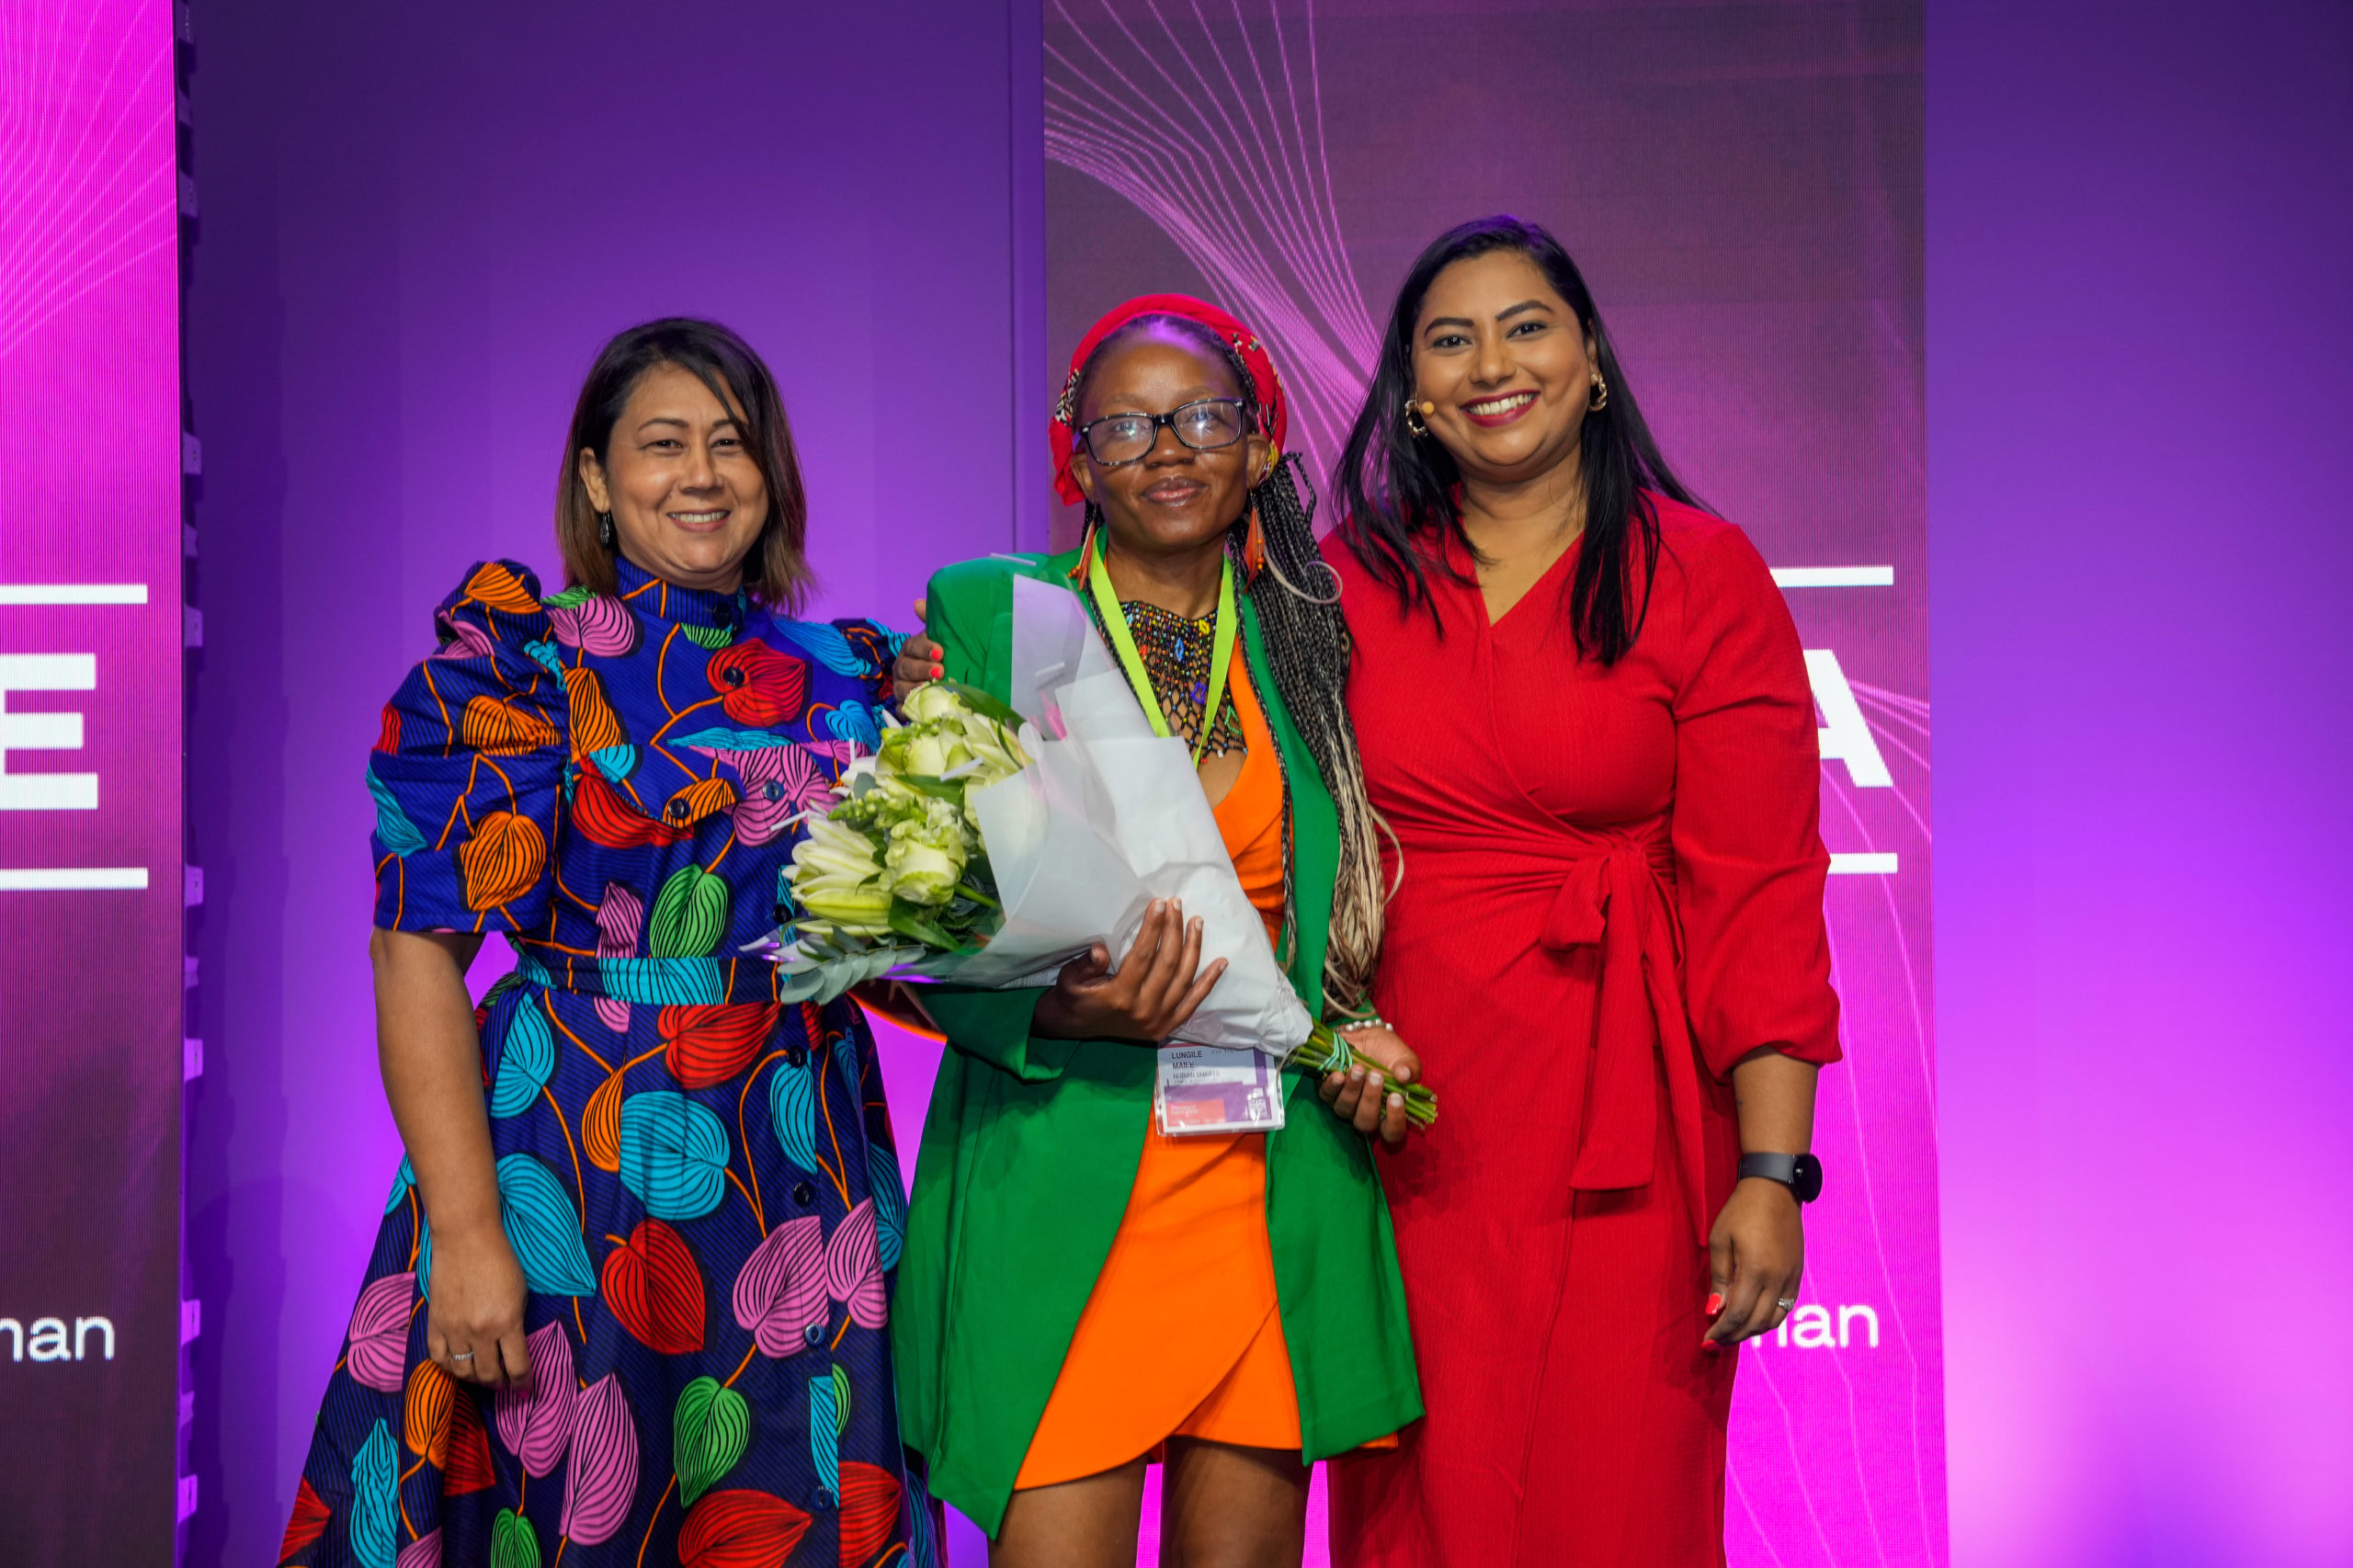 Global Alliance Africa ‘More than a Woman’ Showcase 2023 Award Winner: Lungile Maile